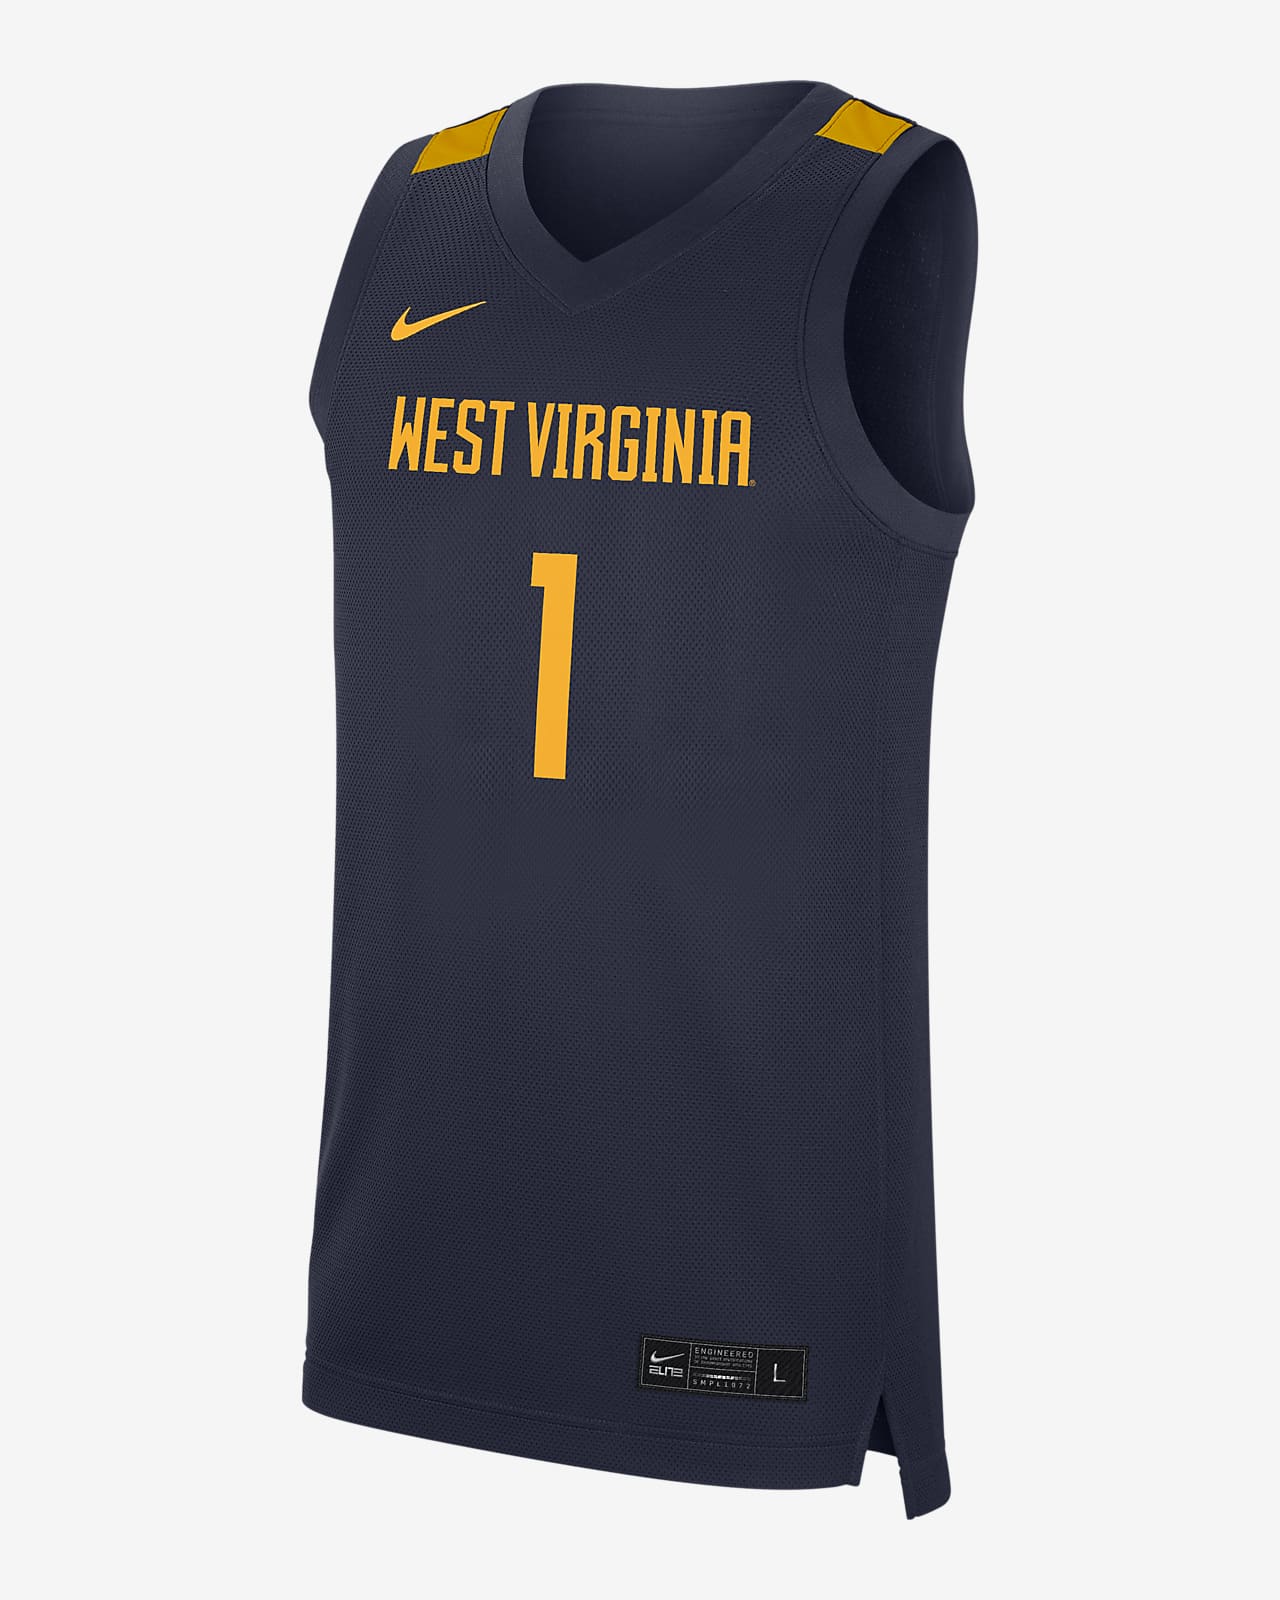 Nike College Dri-FIT (West Virginia) Men's Replica Basketball Jersey